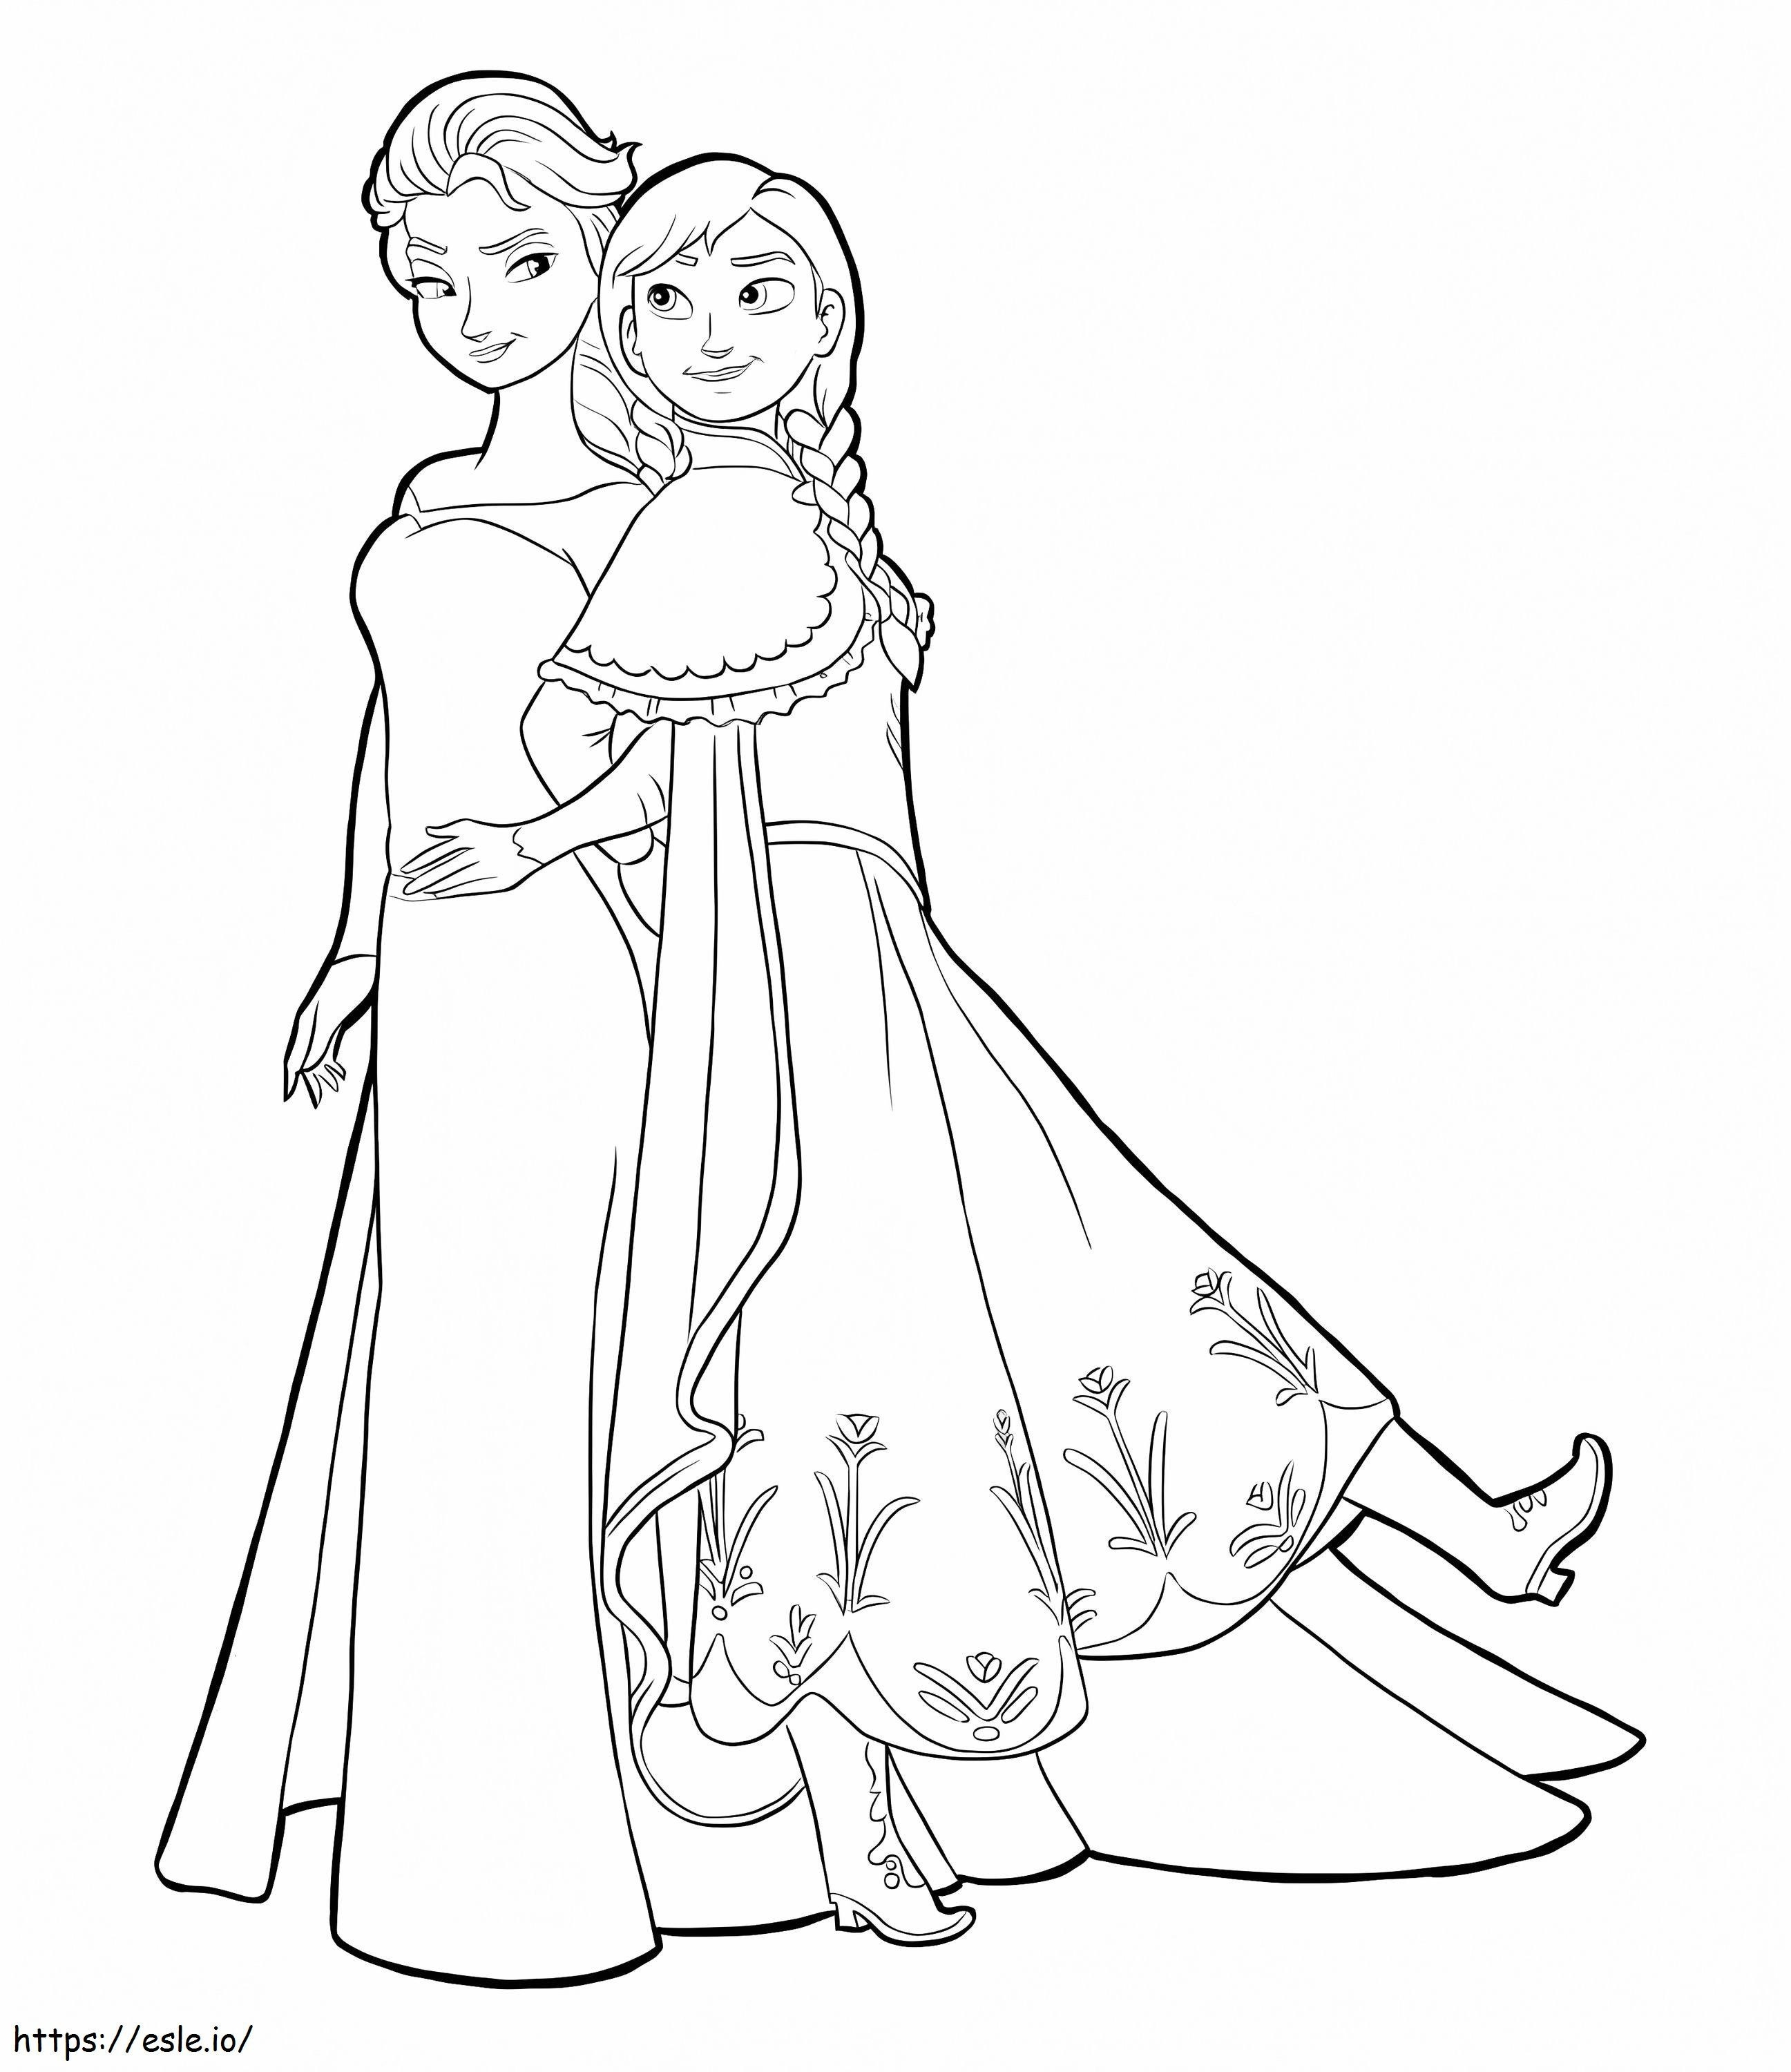 Anna Hugging Elsa coloring page